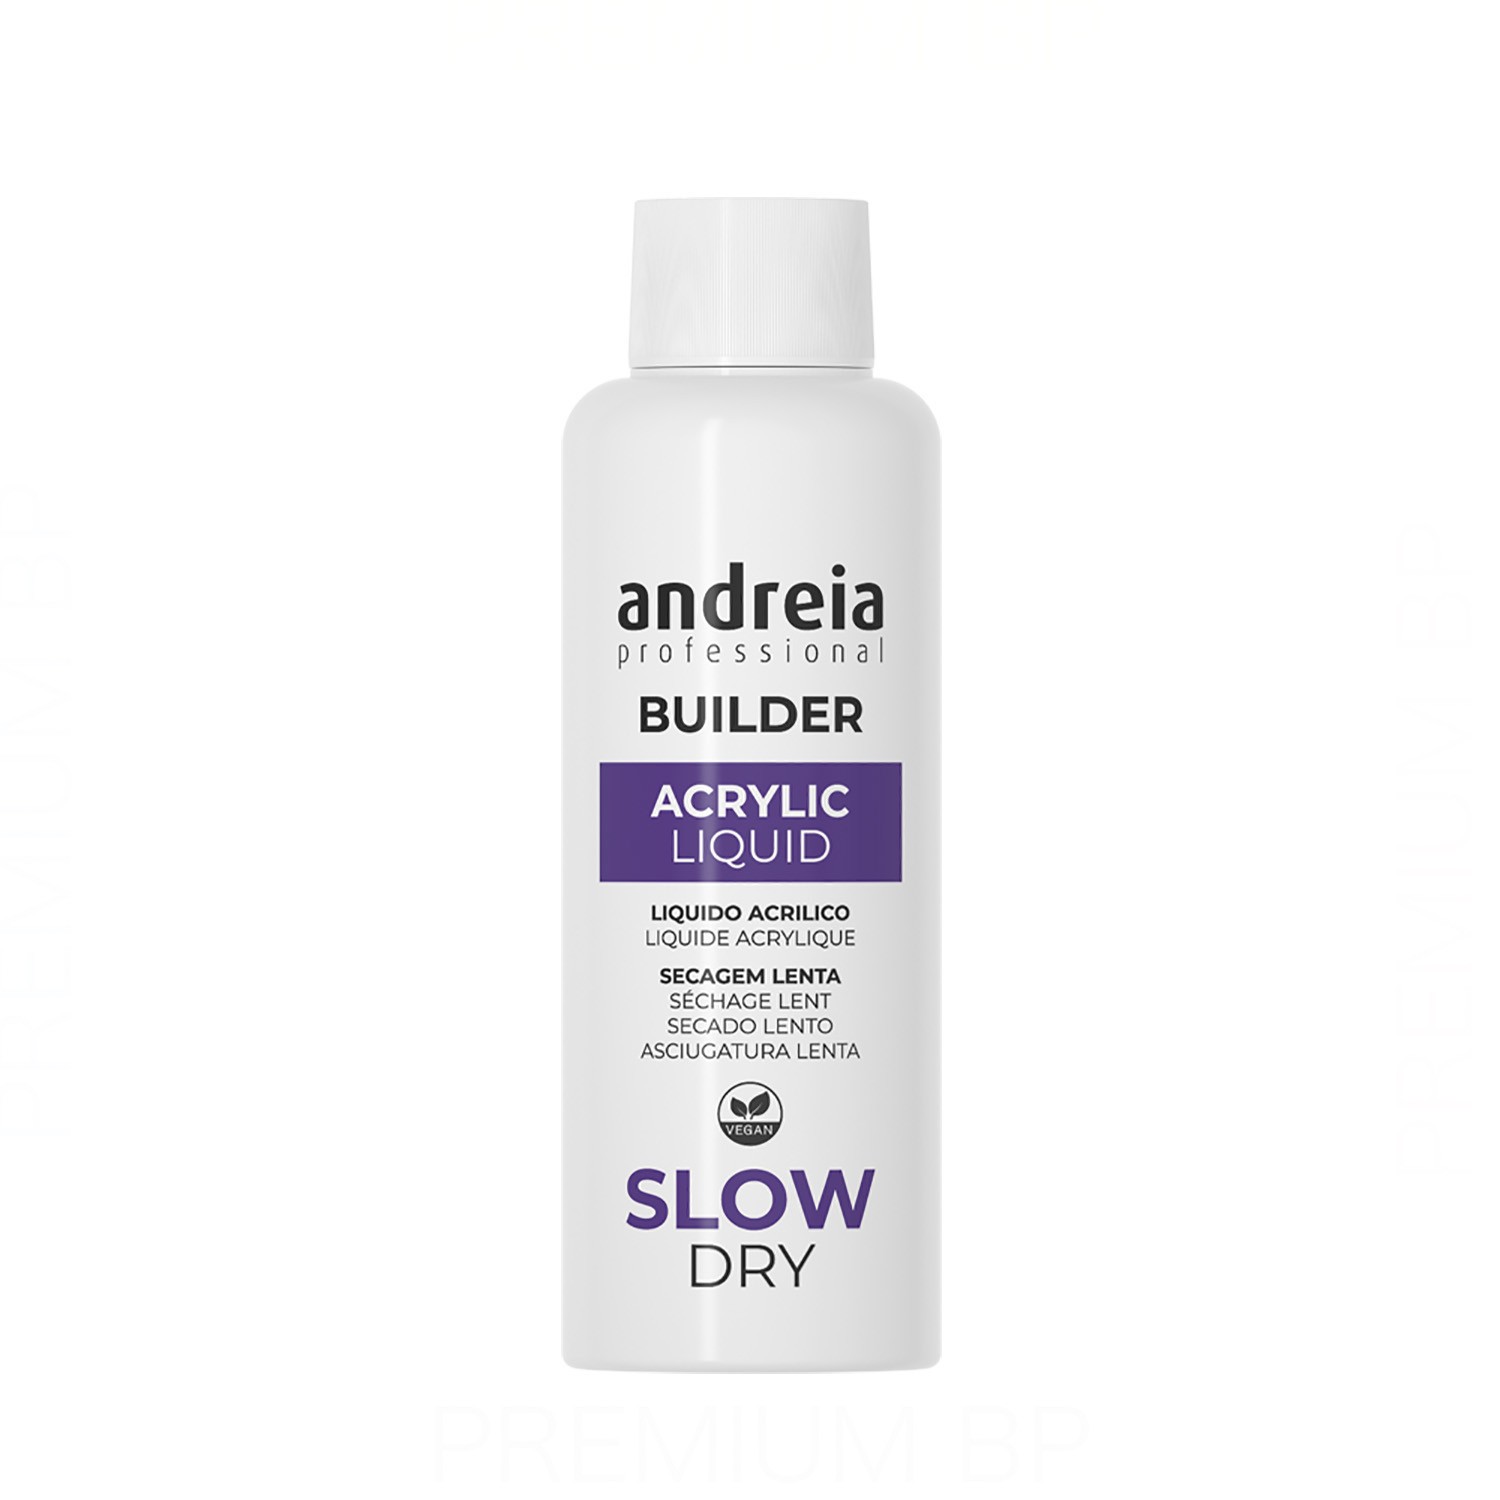 Andreia Professional Builder Acrylic Liquid Slow Dry Liquido Acrilico Secado Lento 100 ml